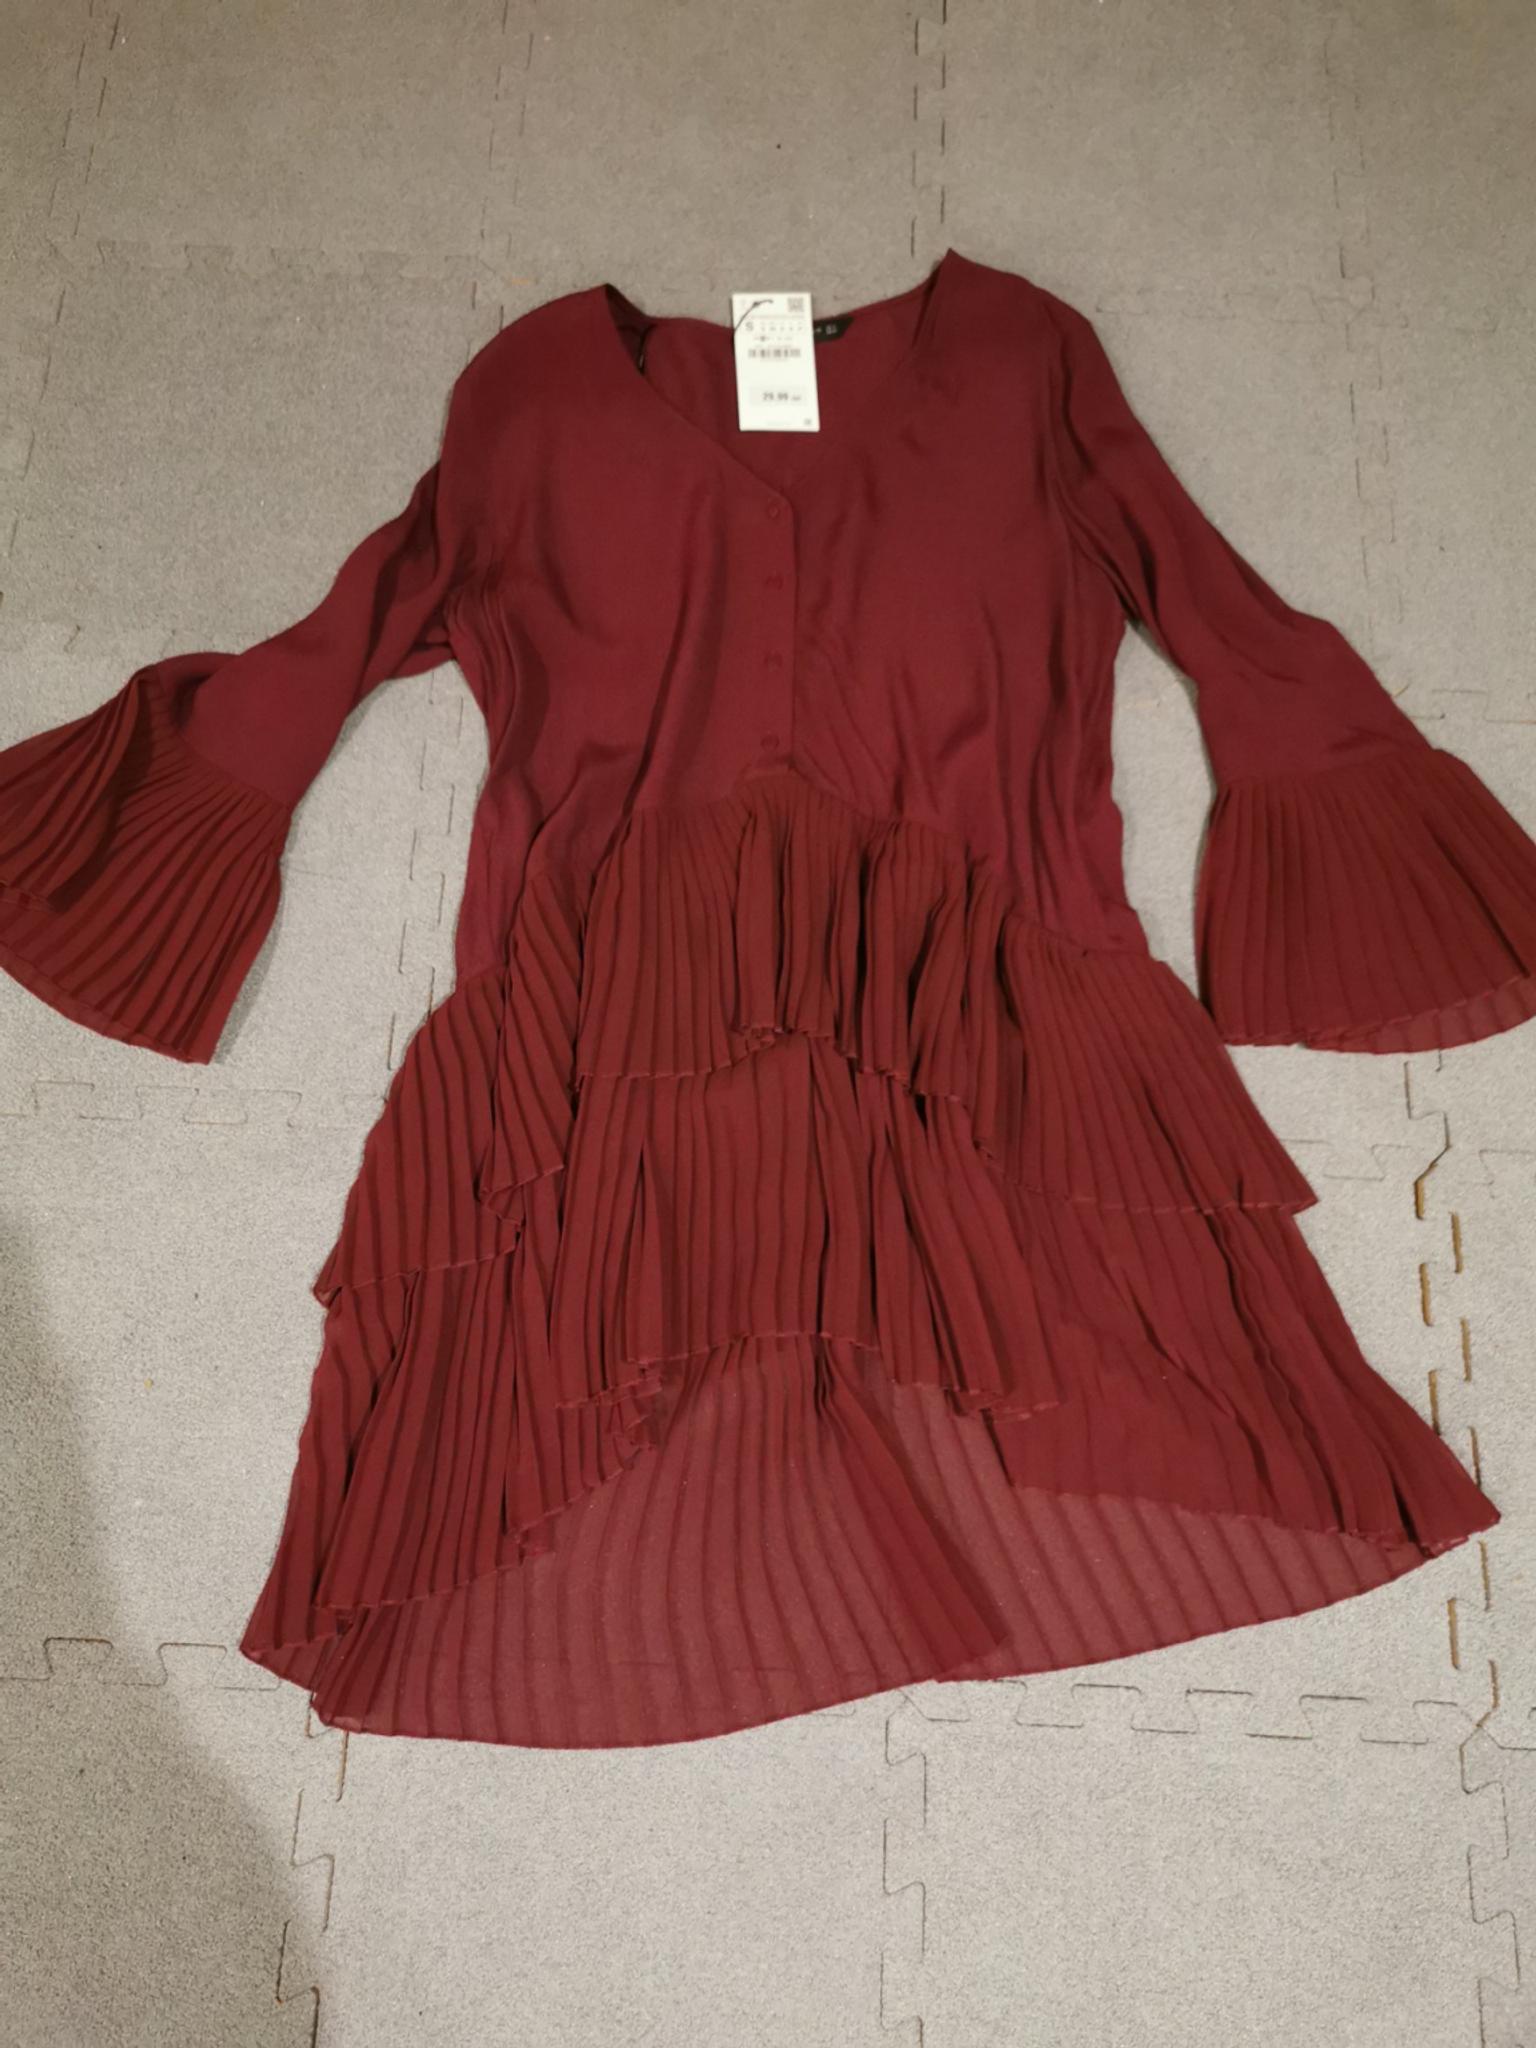 zara maroon dress